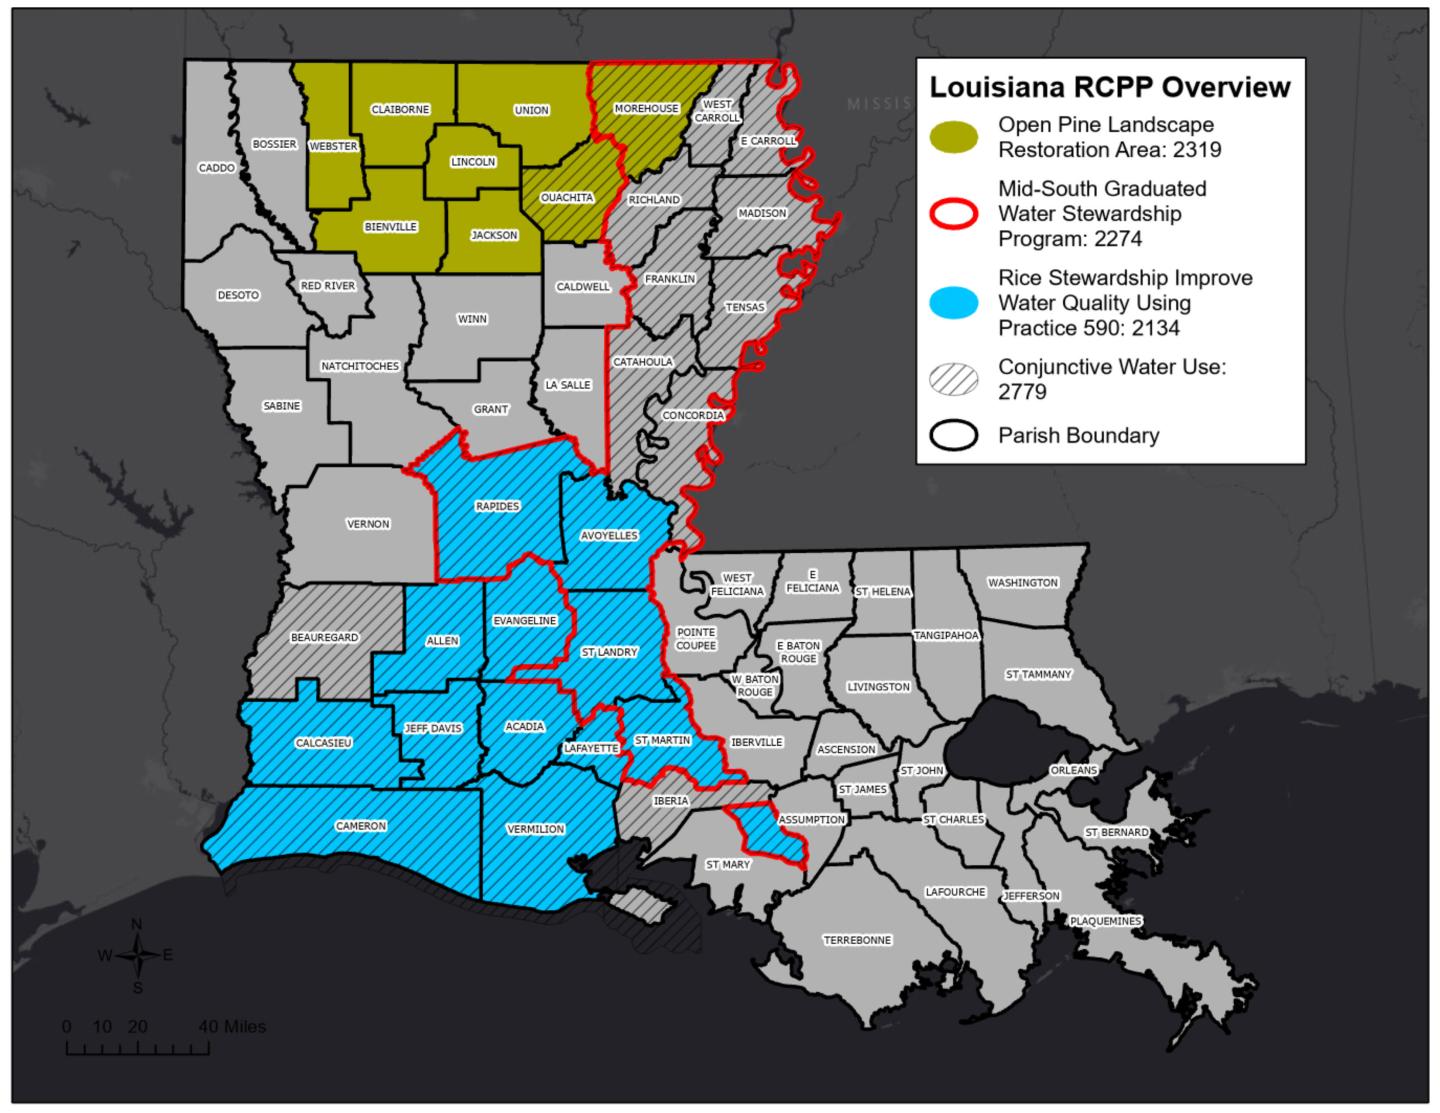 Louisiana RCPP Overview